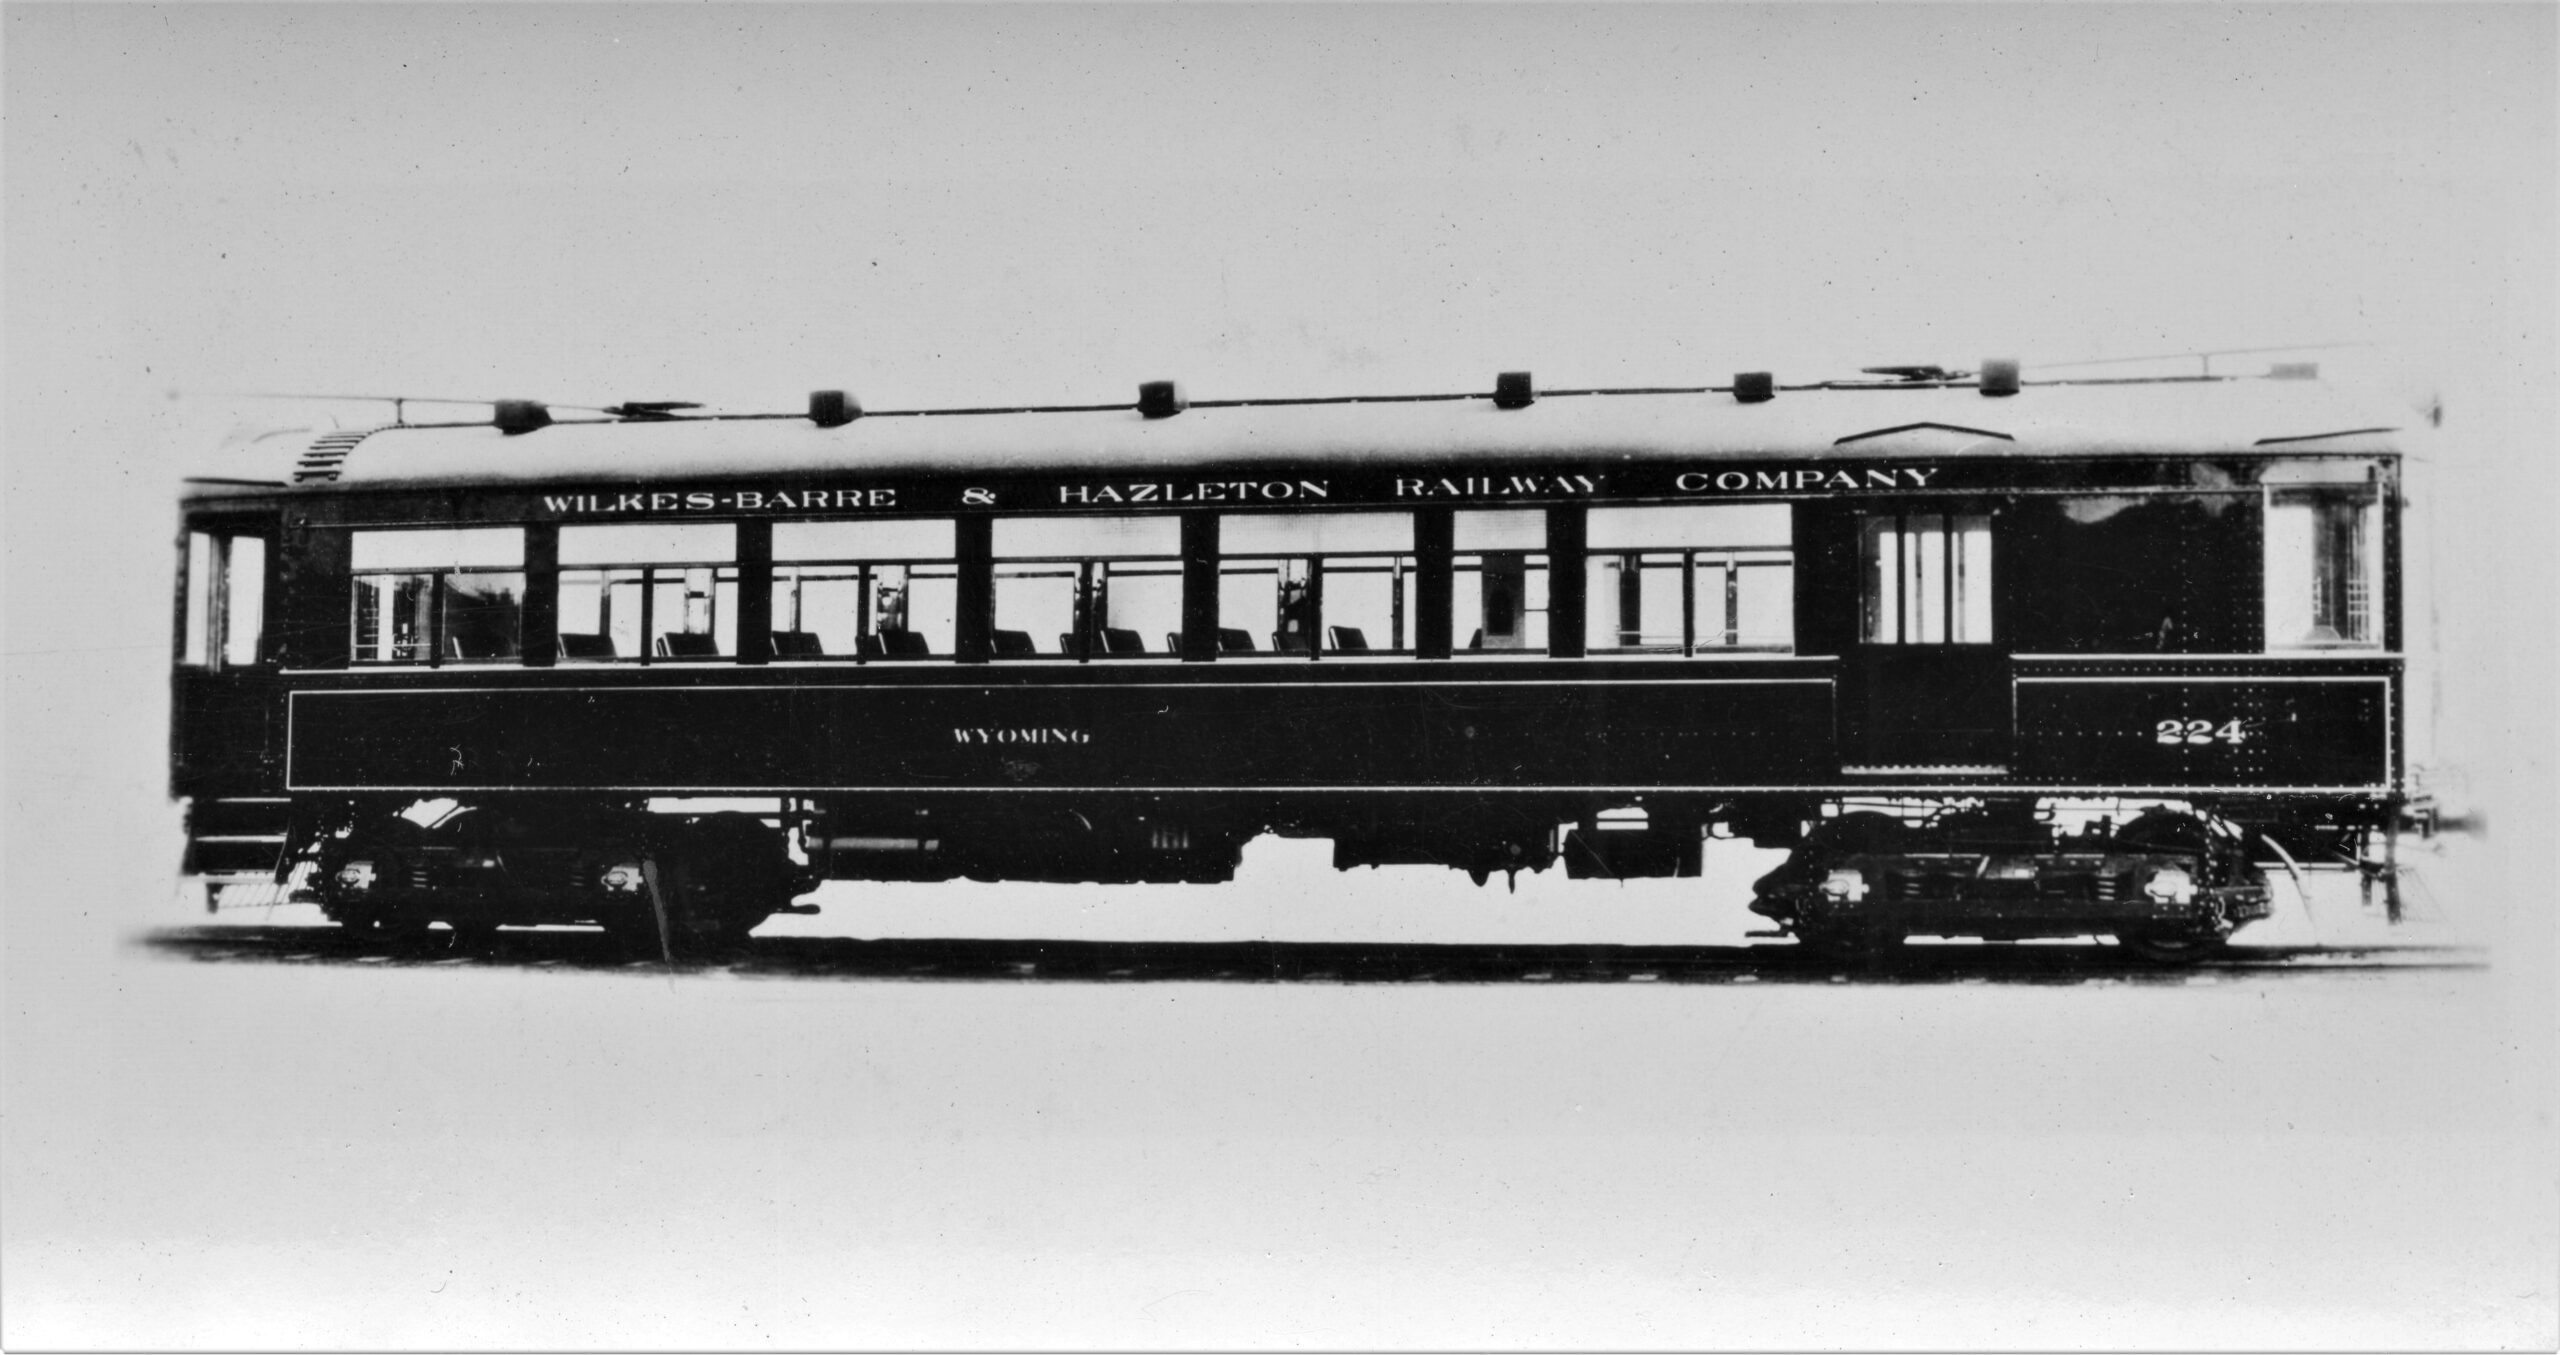 Wilkes Barre and Hazleton Electric Railway Company | Philadelphia, Pa. | Brill Car 224 “Wyoming” | 1915